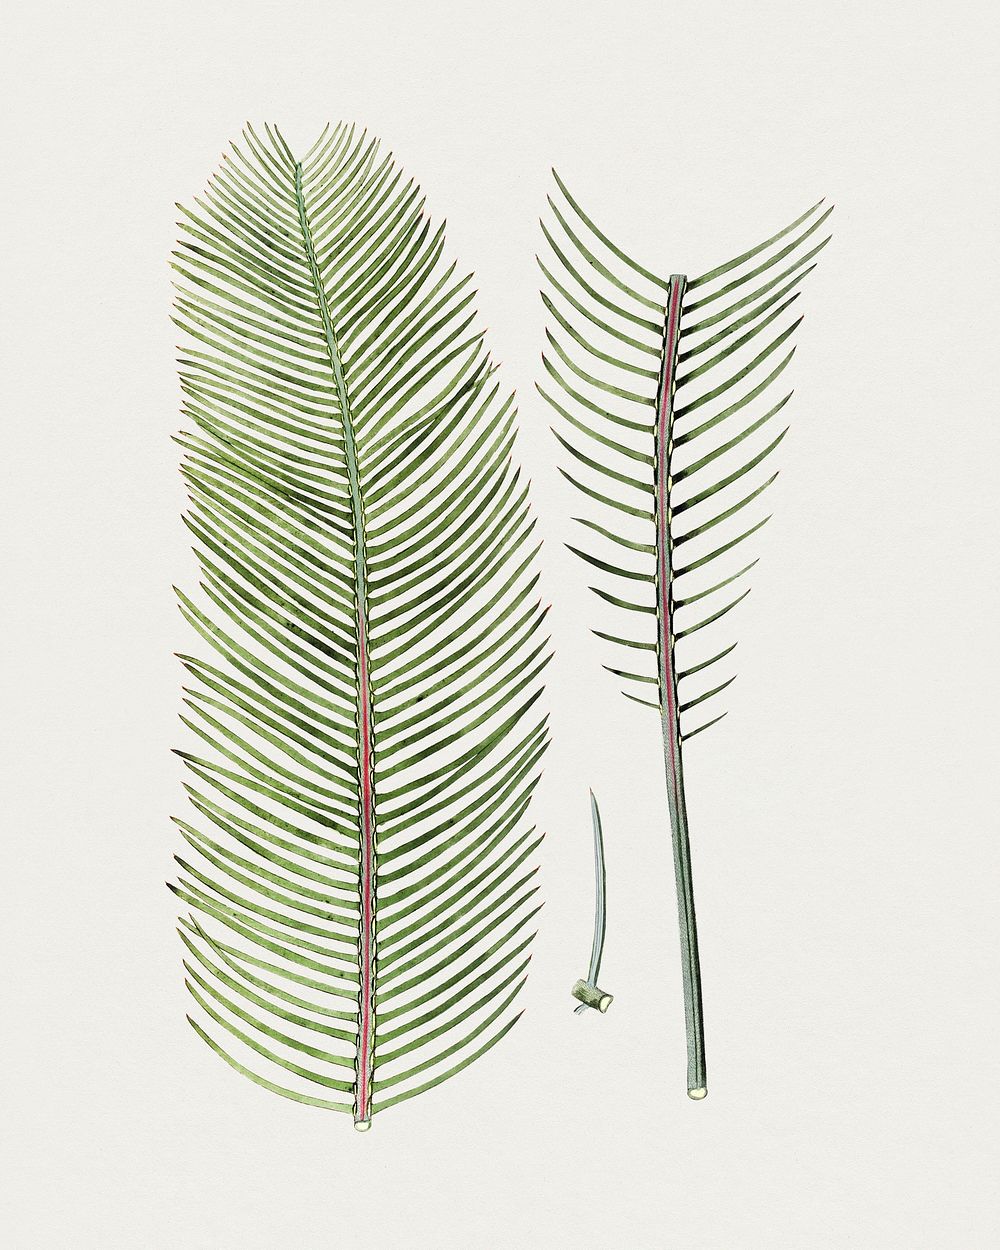 Hand drawn zamia leaf. Original from Biodiversity Heritage Library. Digitally enhanced by rawpixel.